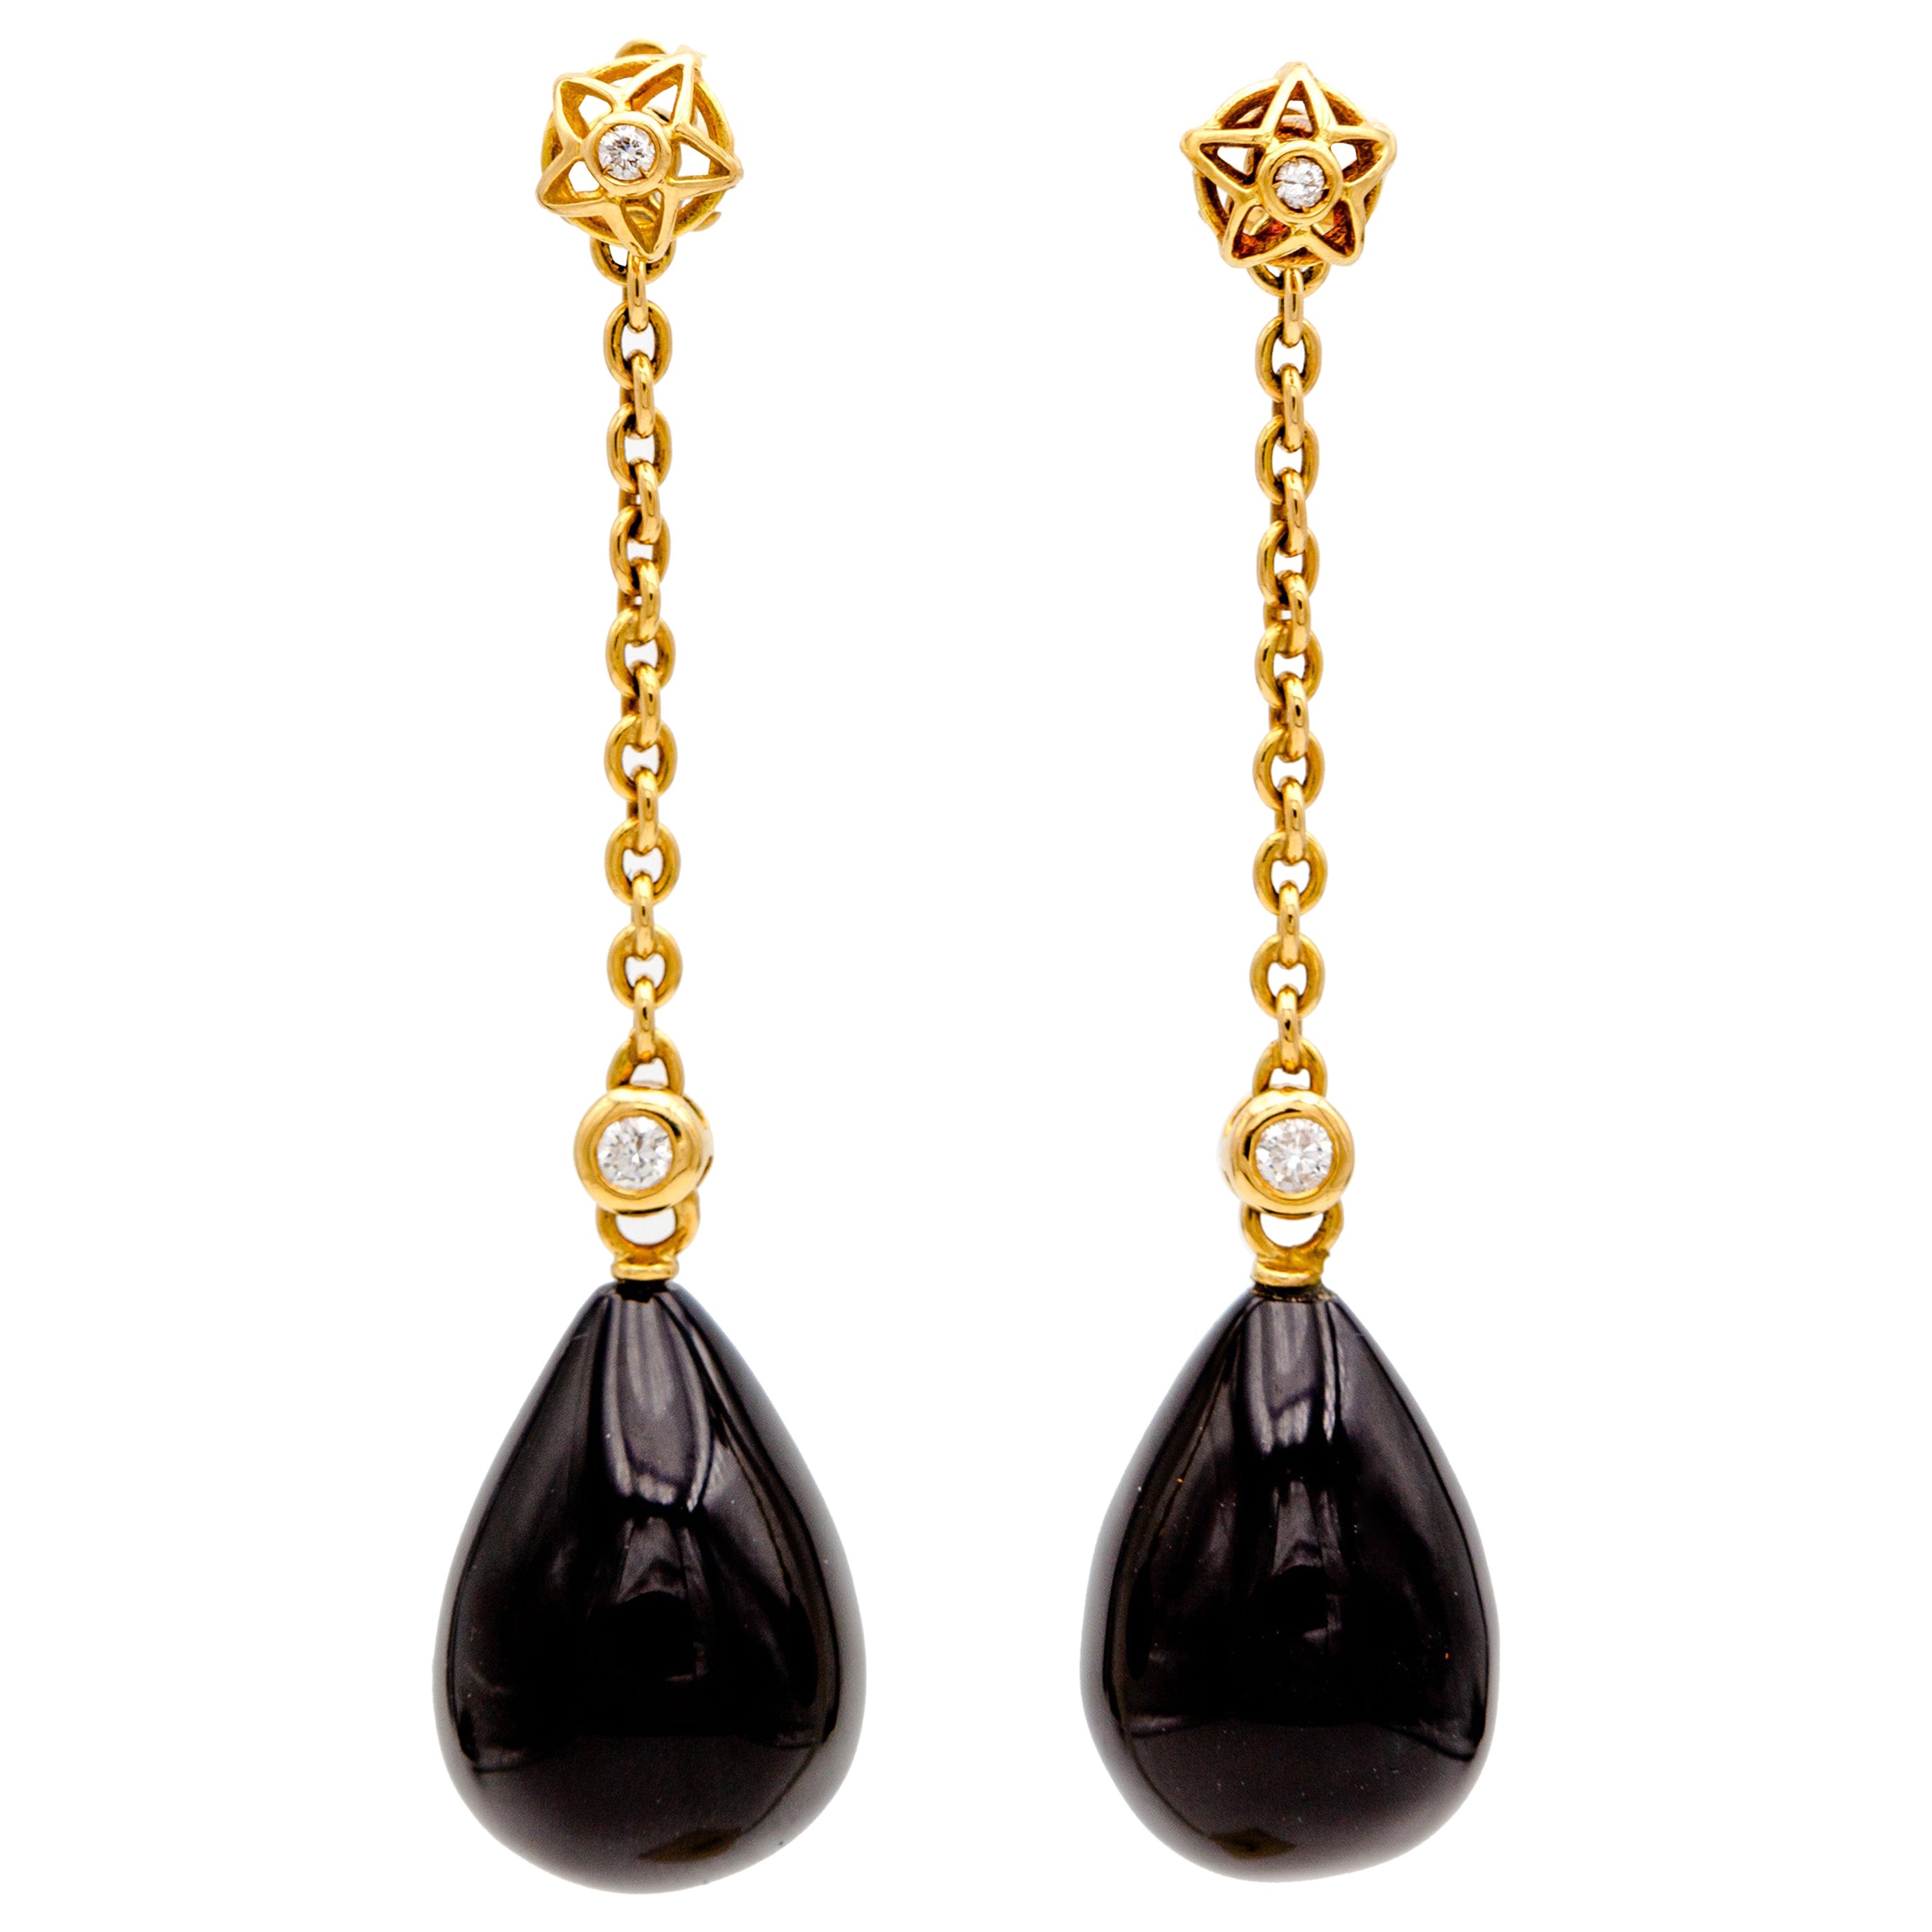 Black Onyx and Diamonds Long Gold Pendant Earrings "Stagioni"